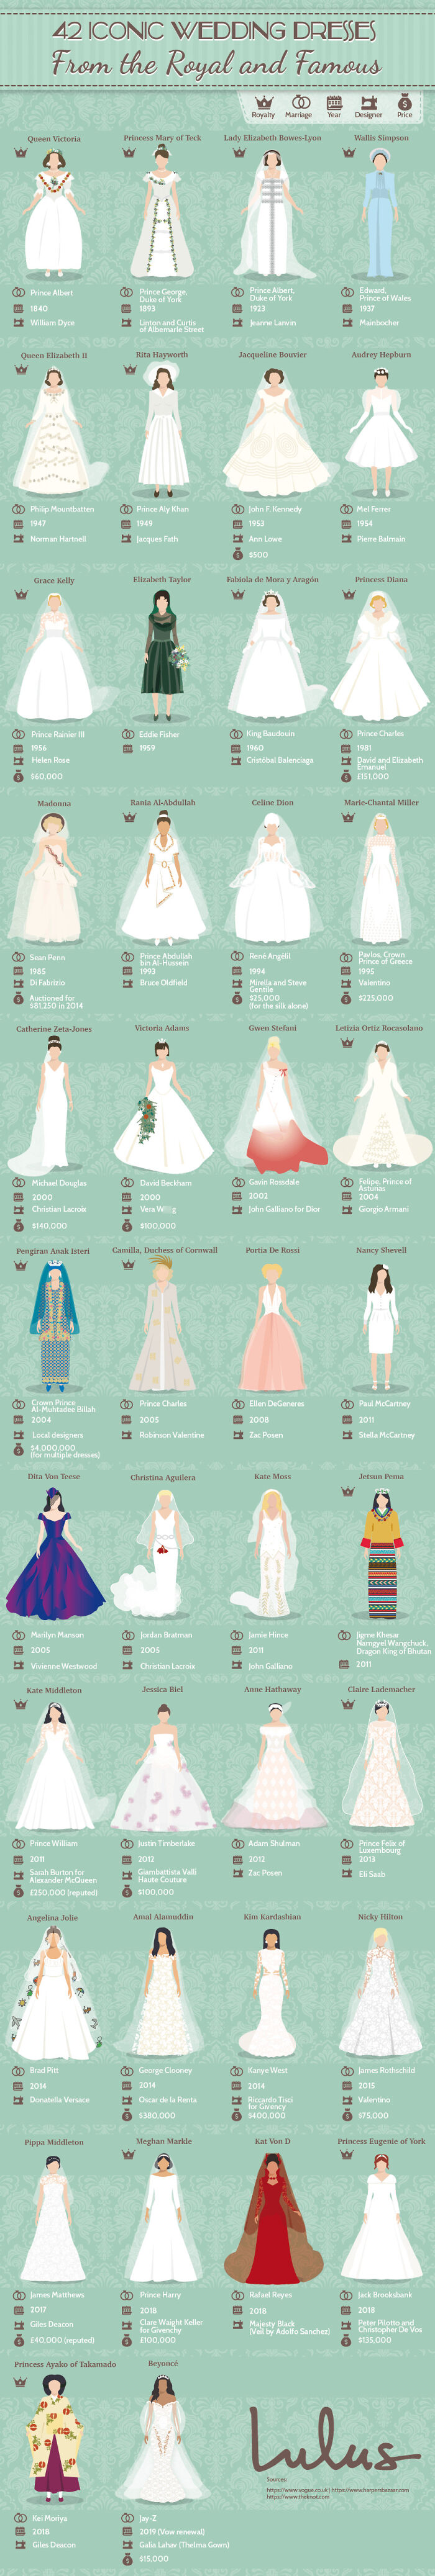 Iconic Celebrity & Royal Wedding Dresses Throughout History